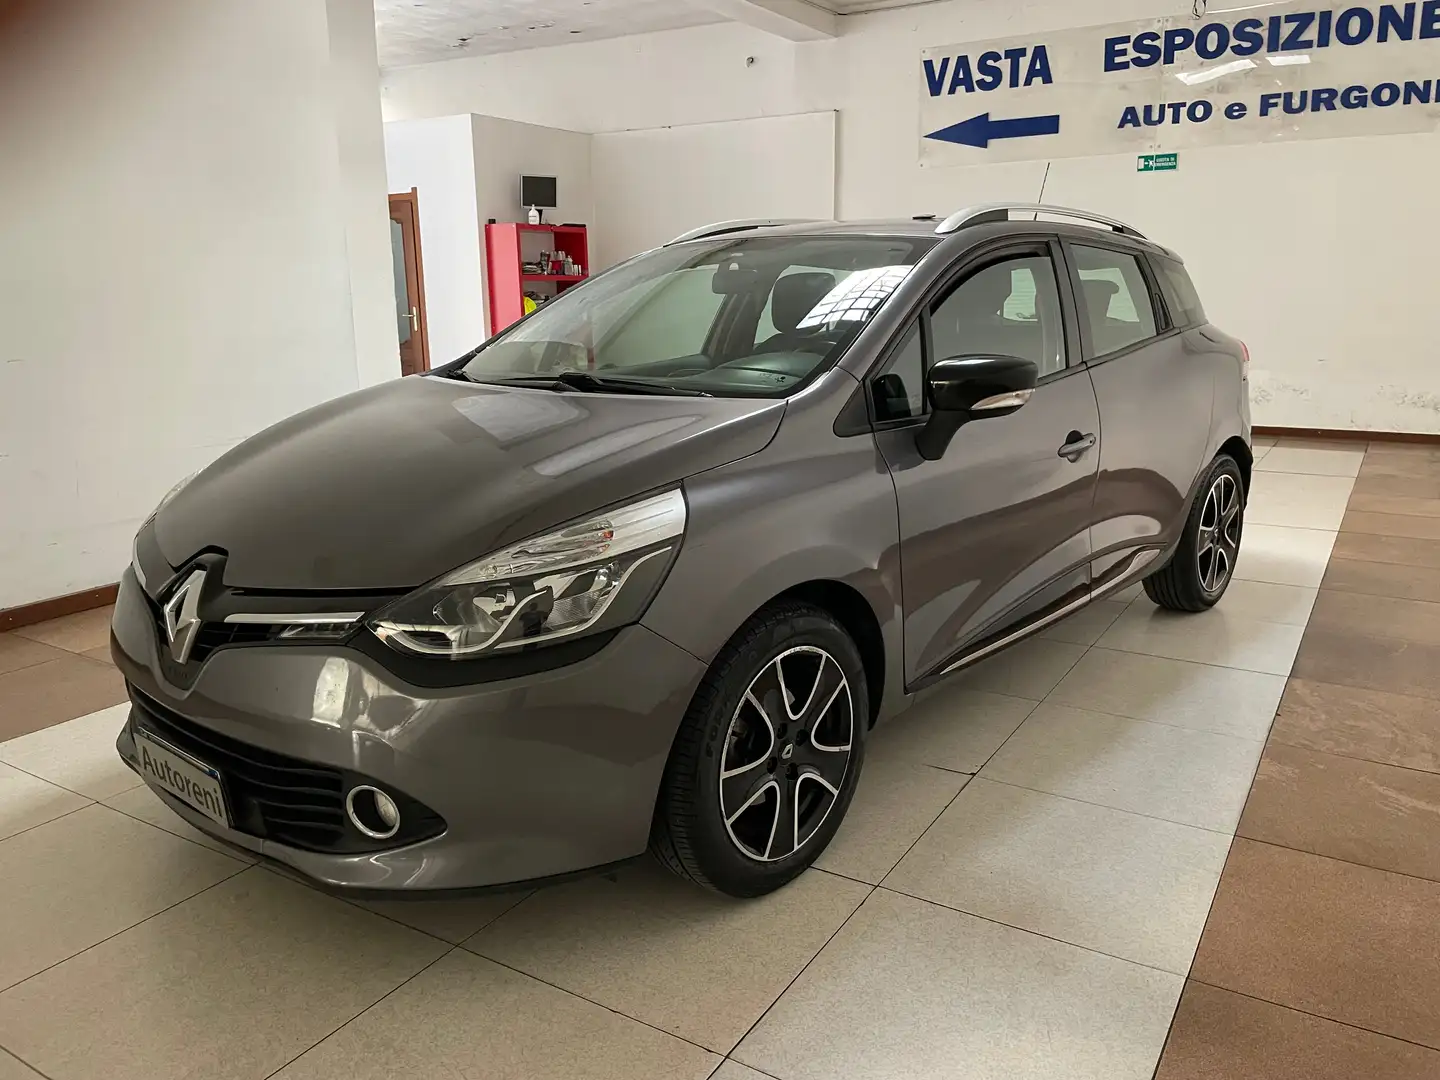 usato Renault Clio Station wagon a Torino - To per € 8.500,-